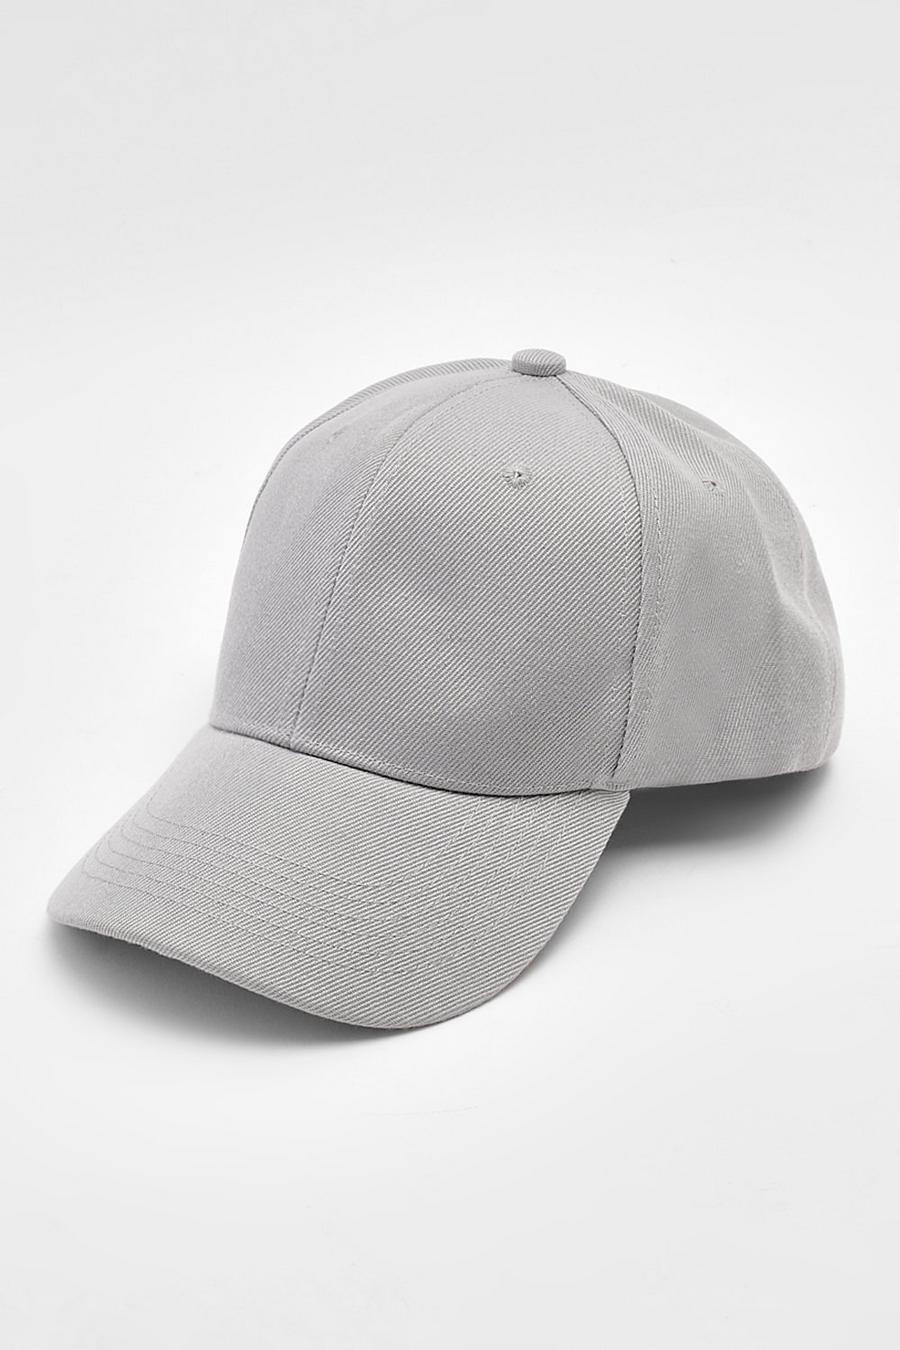 Light grey כובע מצחייה בייסבול חלק בצבע אפור בהיר